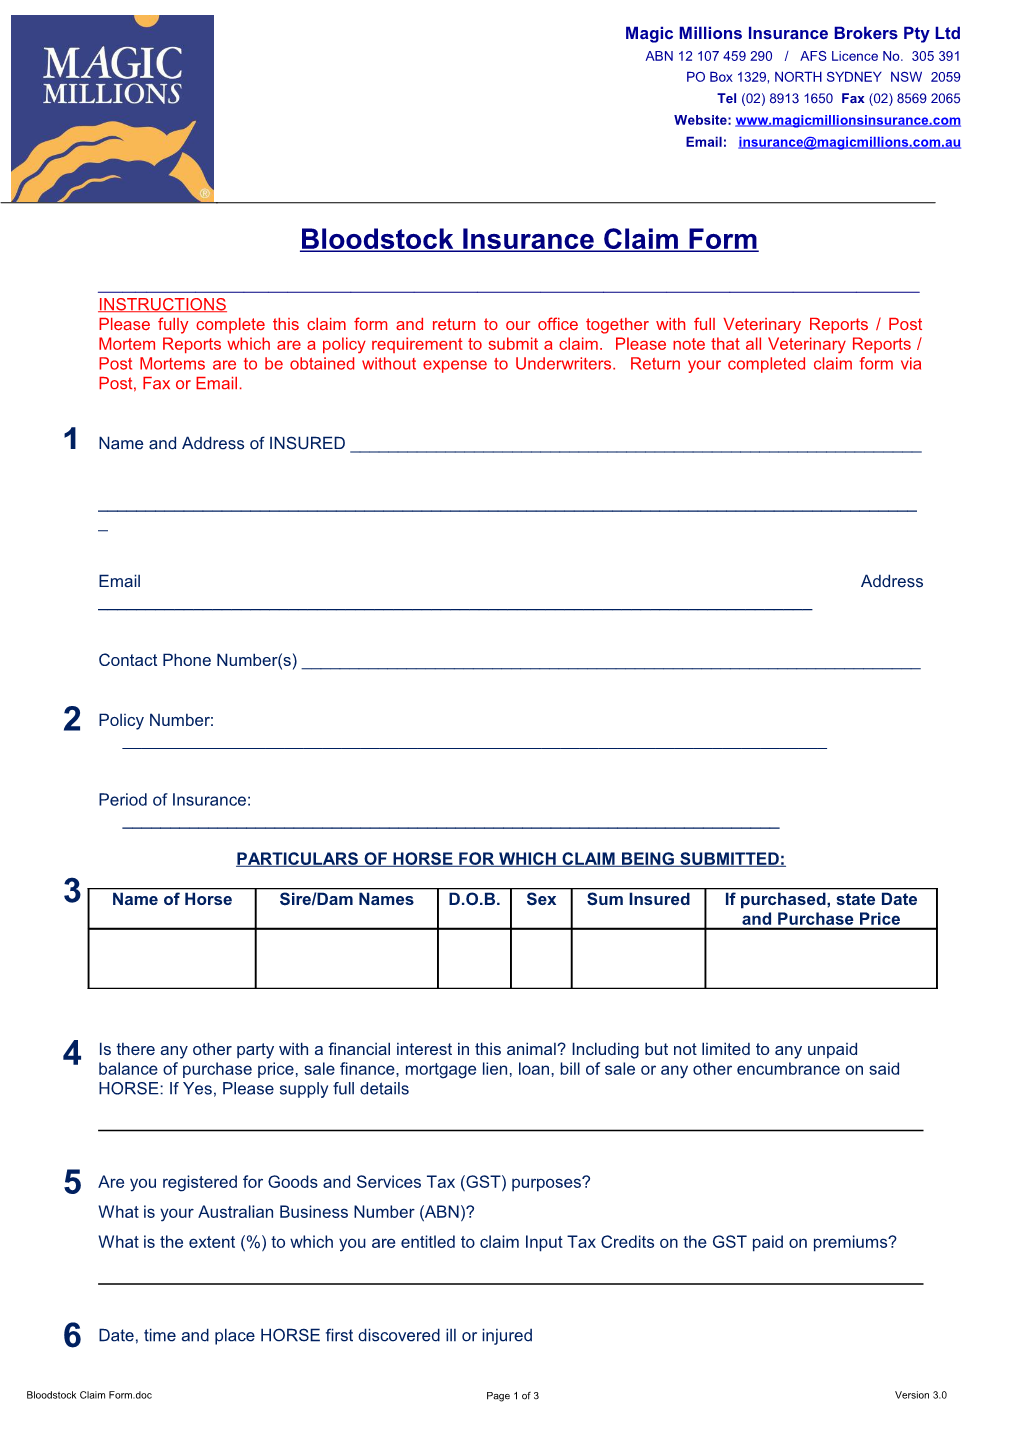 Bloodstock Insurance Claim Form